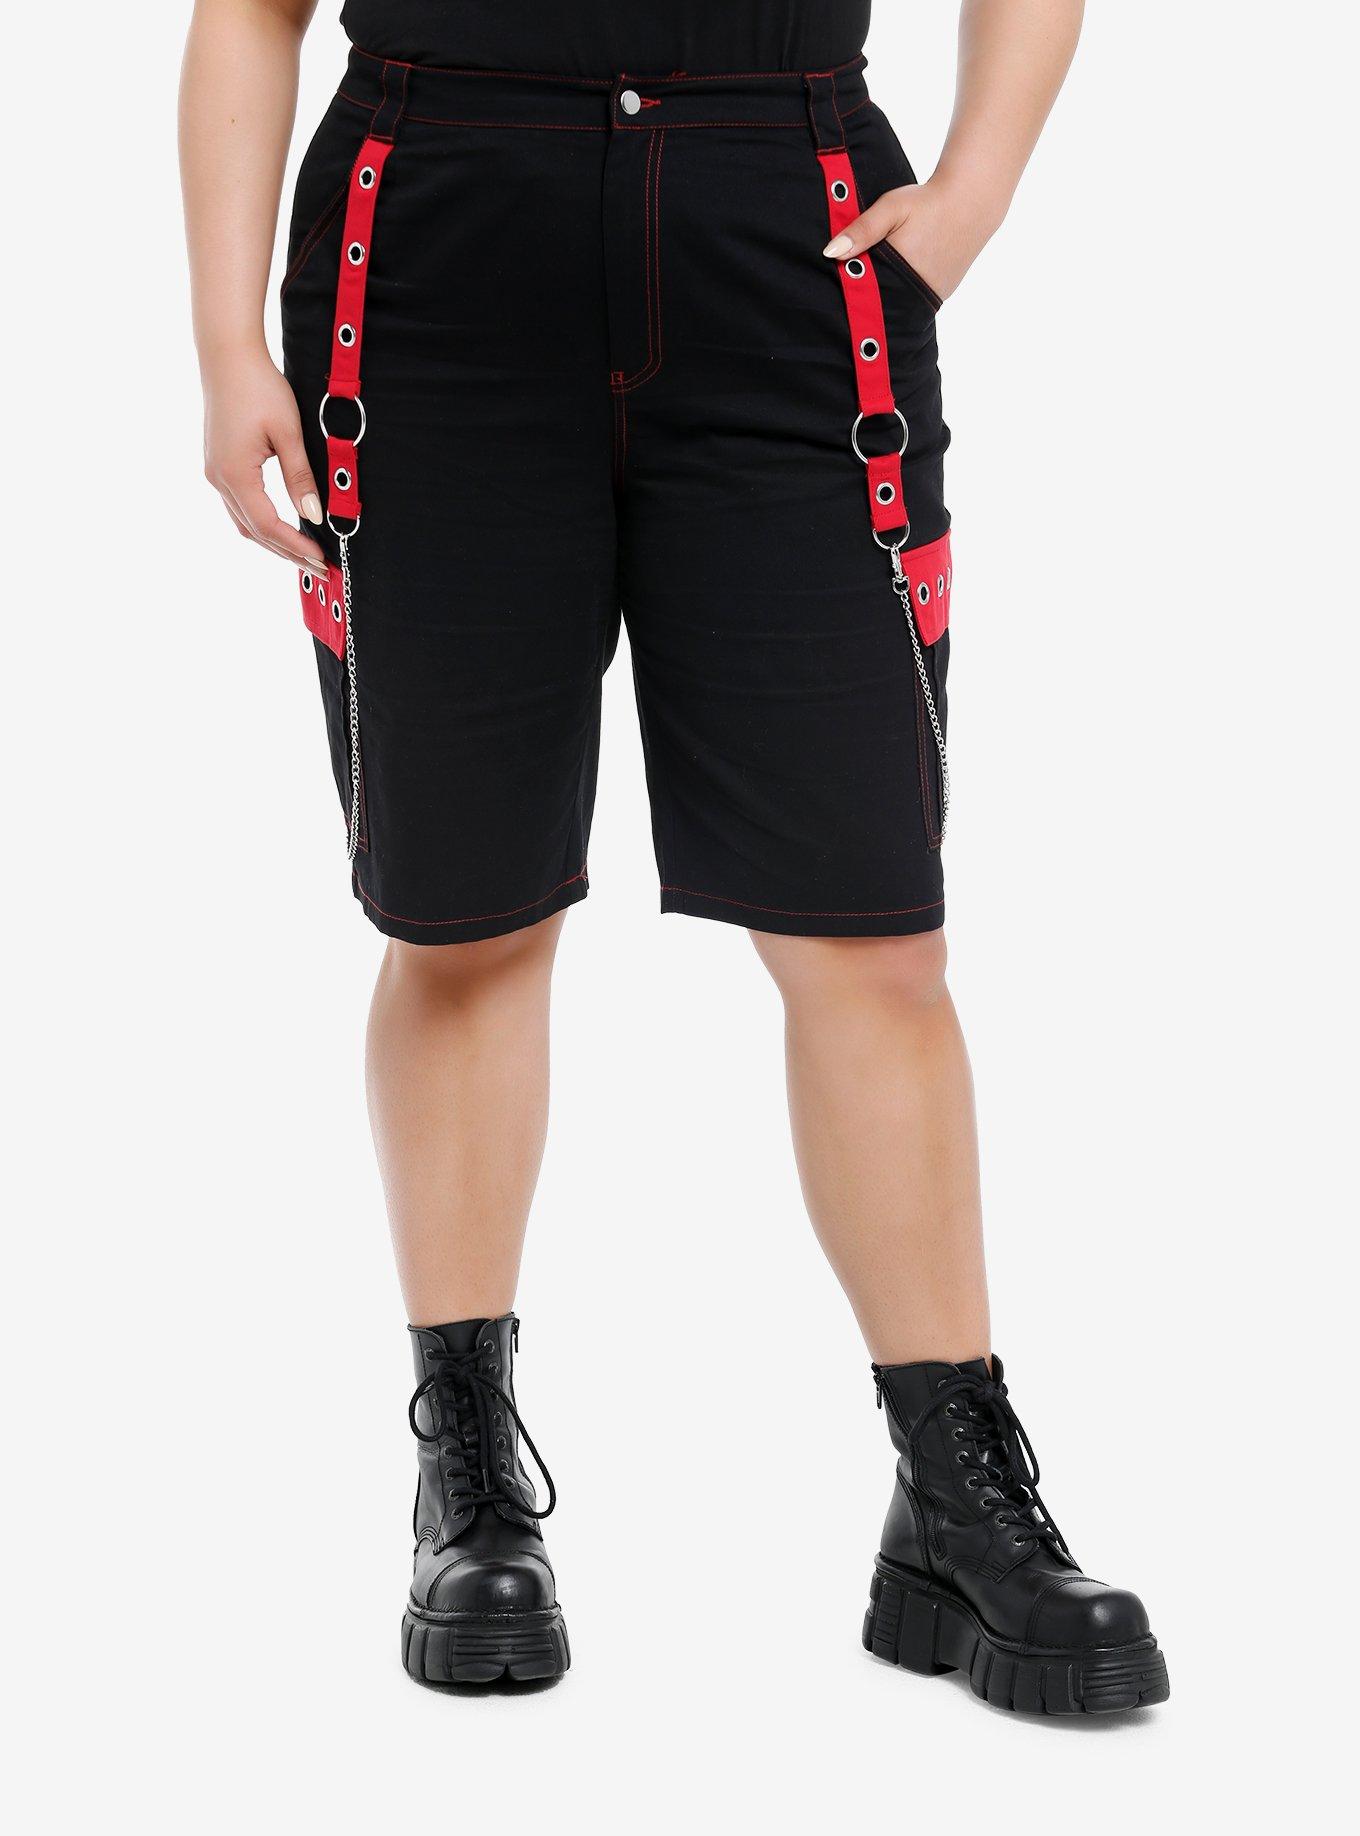 Social Collision Black & Red Grommet Chain Carpenter Shorts Plus Size, RED, hi-res